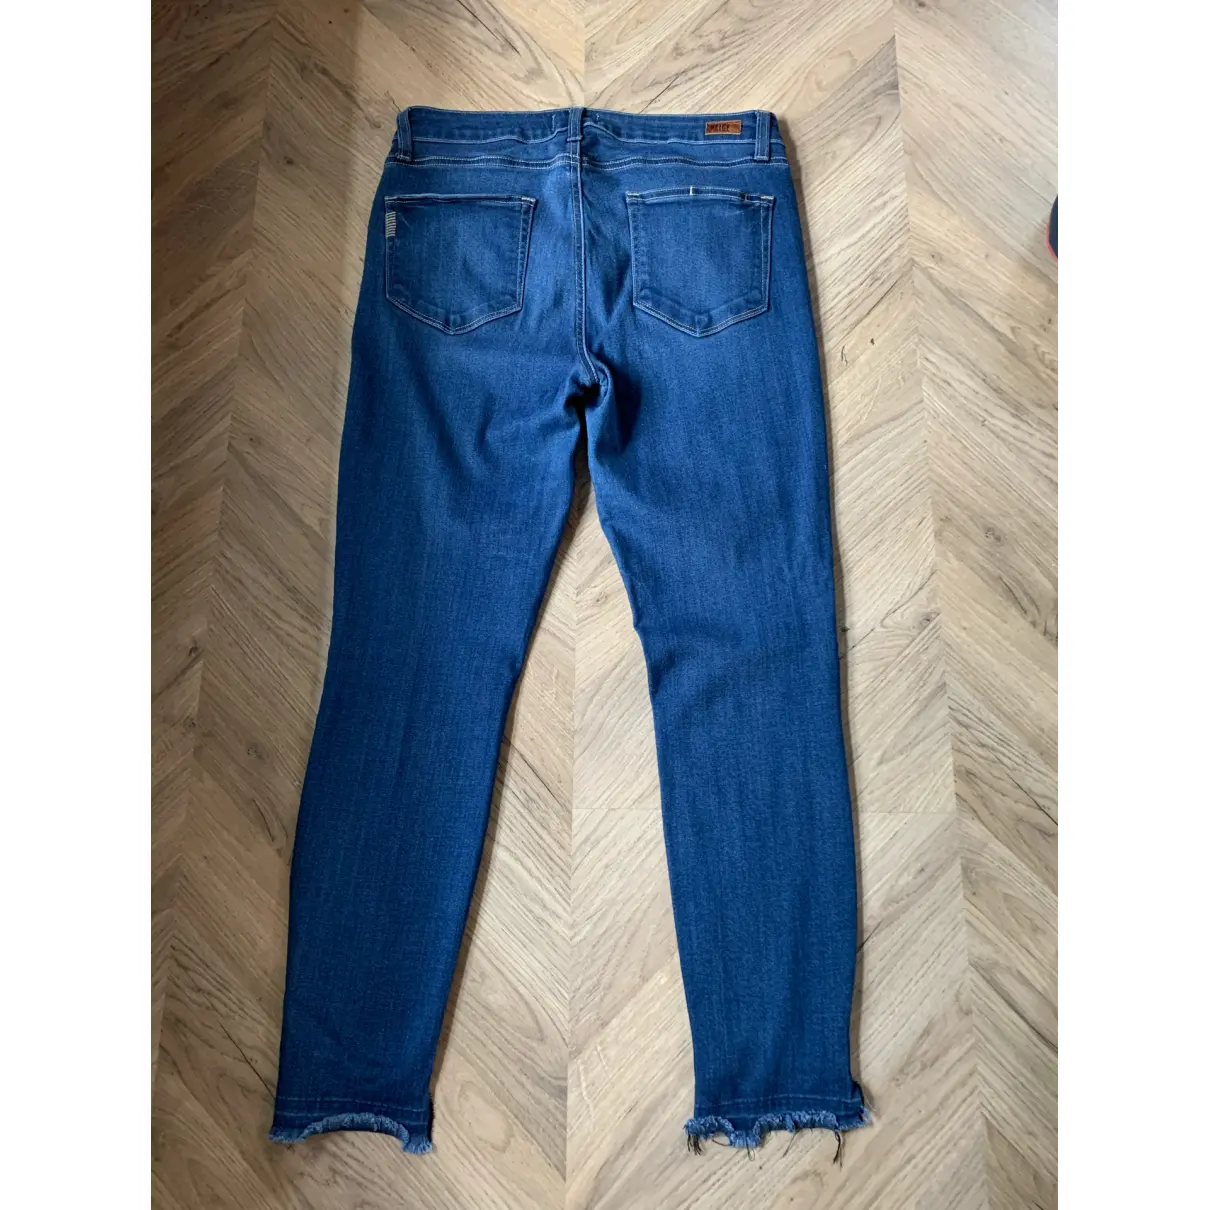 Buy Paige Jeans Slim jeans online